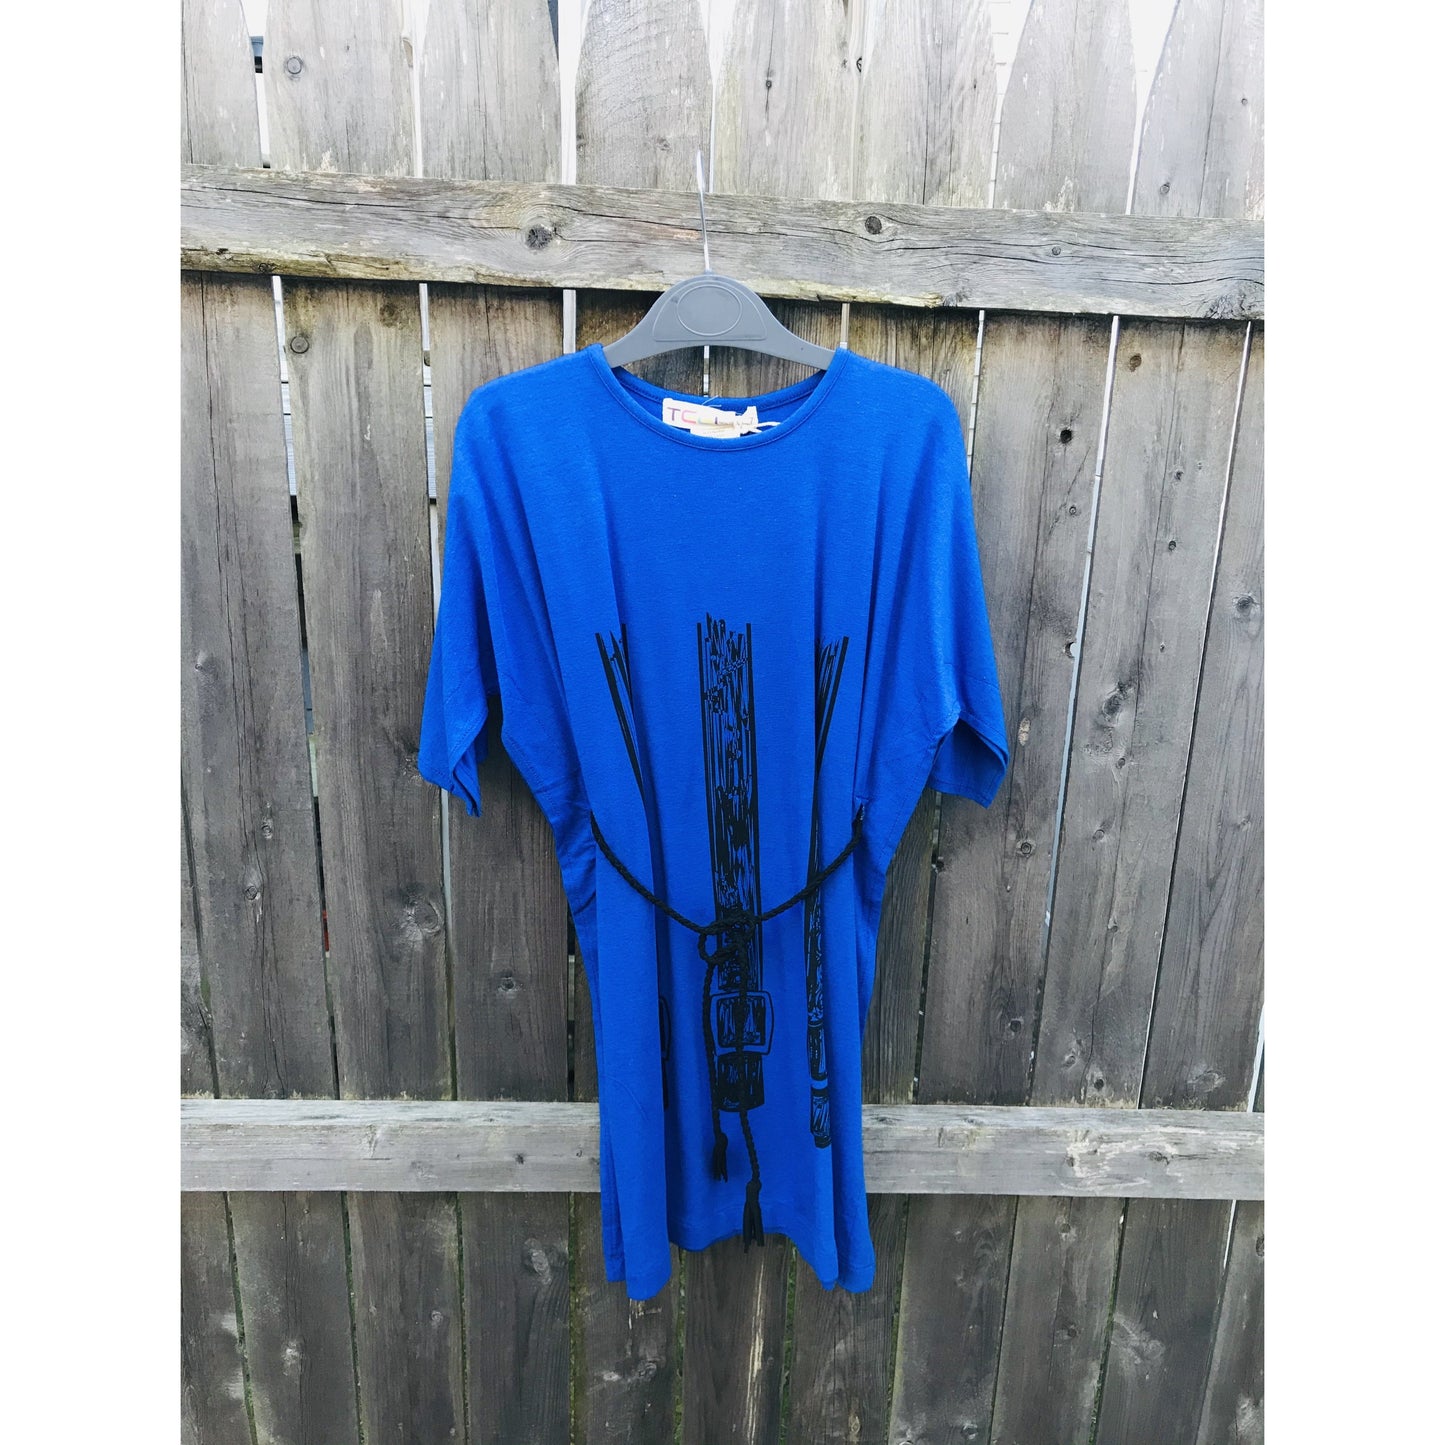 Teela Girls Square Belt Print Dress LA8021B - Modest Necessities